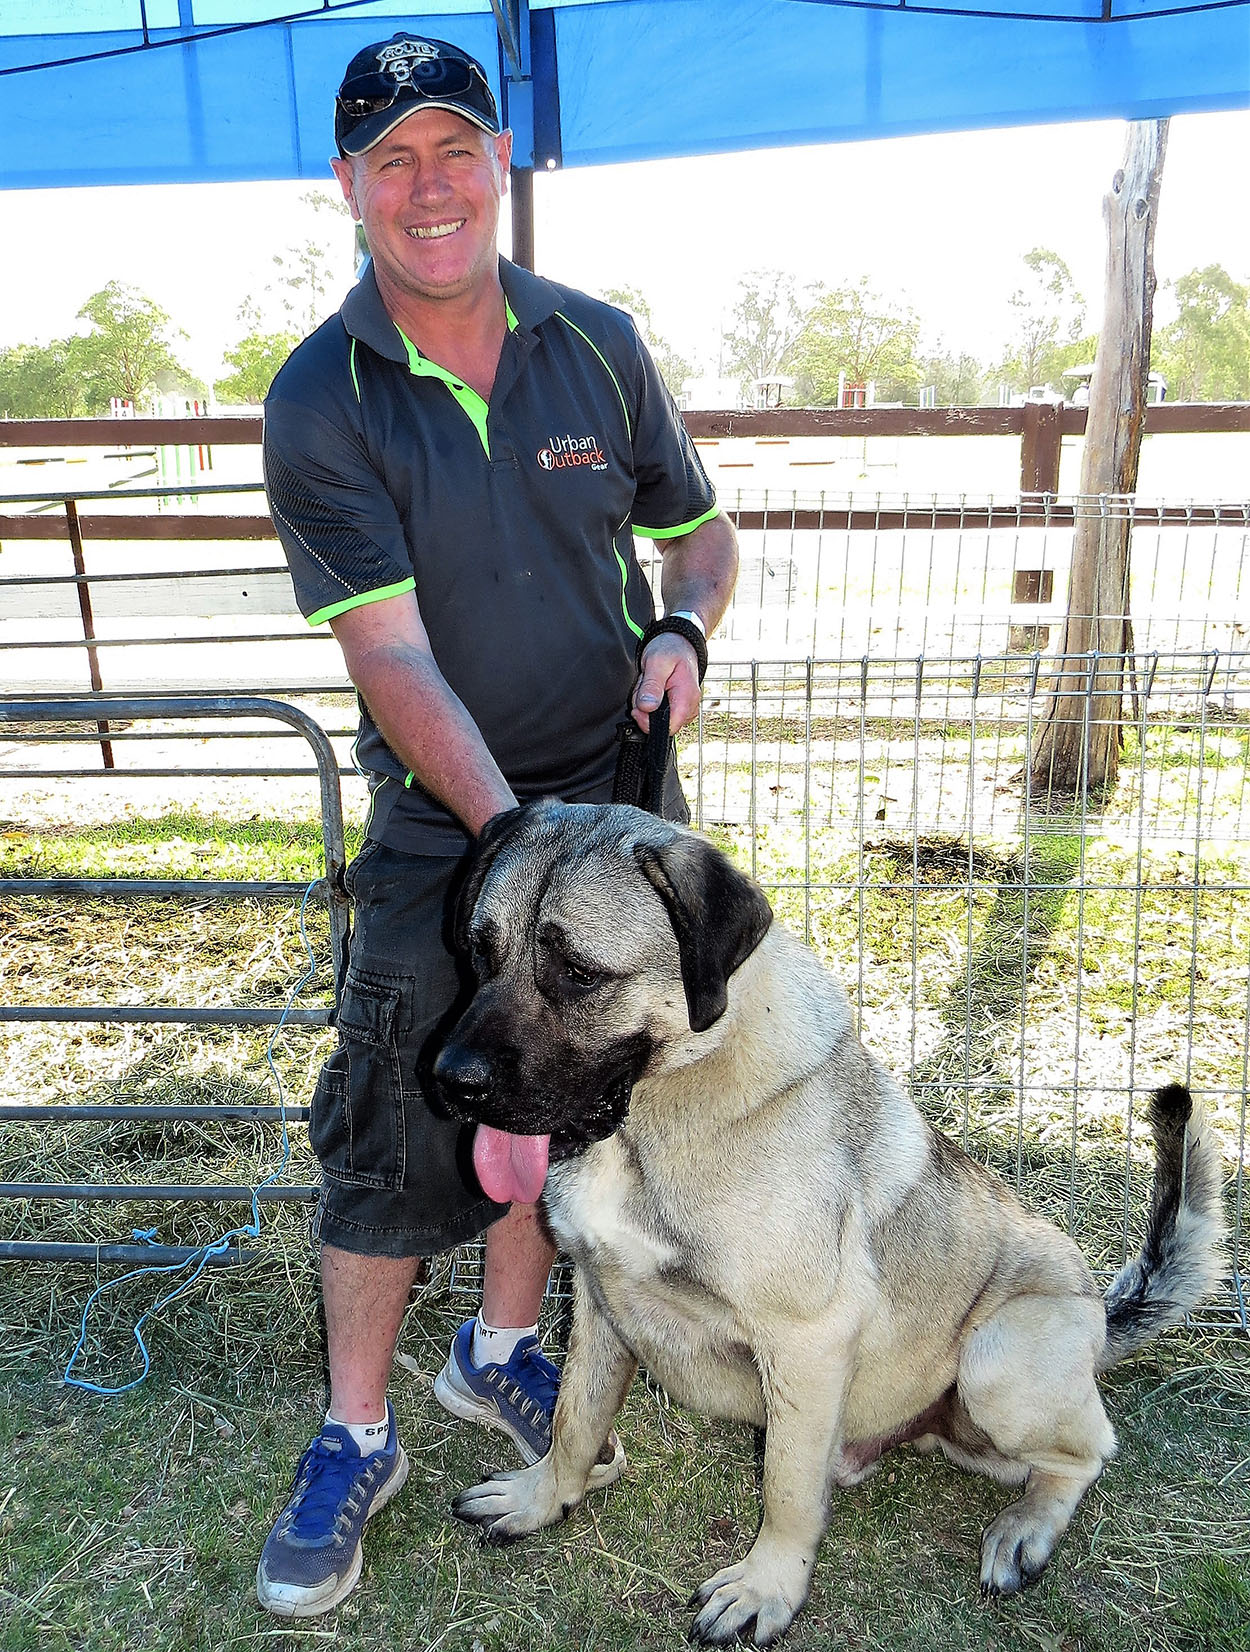 ANIMAL FARM: Scott McGuiness with one-year old Bruiser, an Anatolian Shepherd